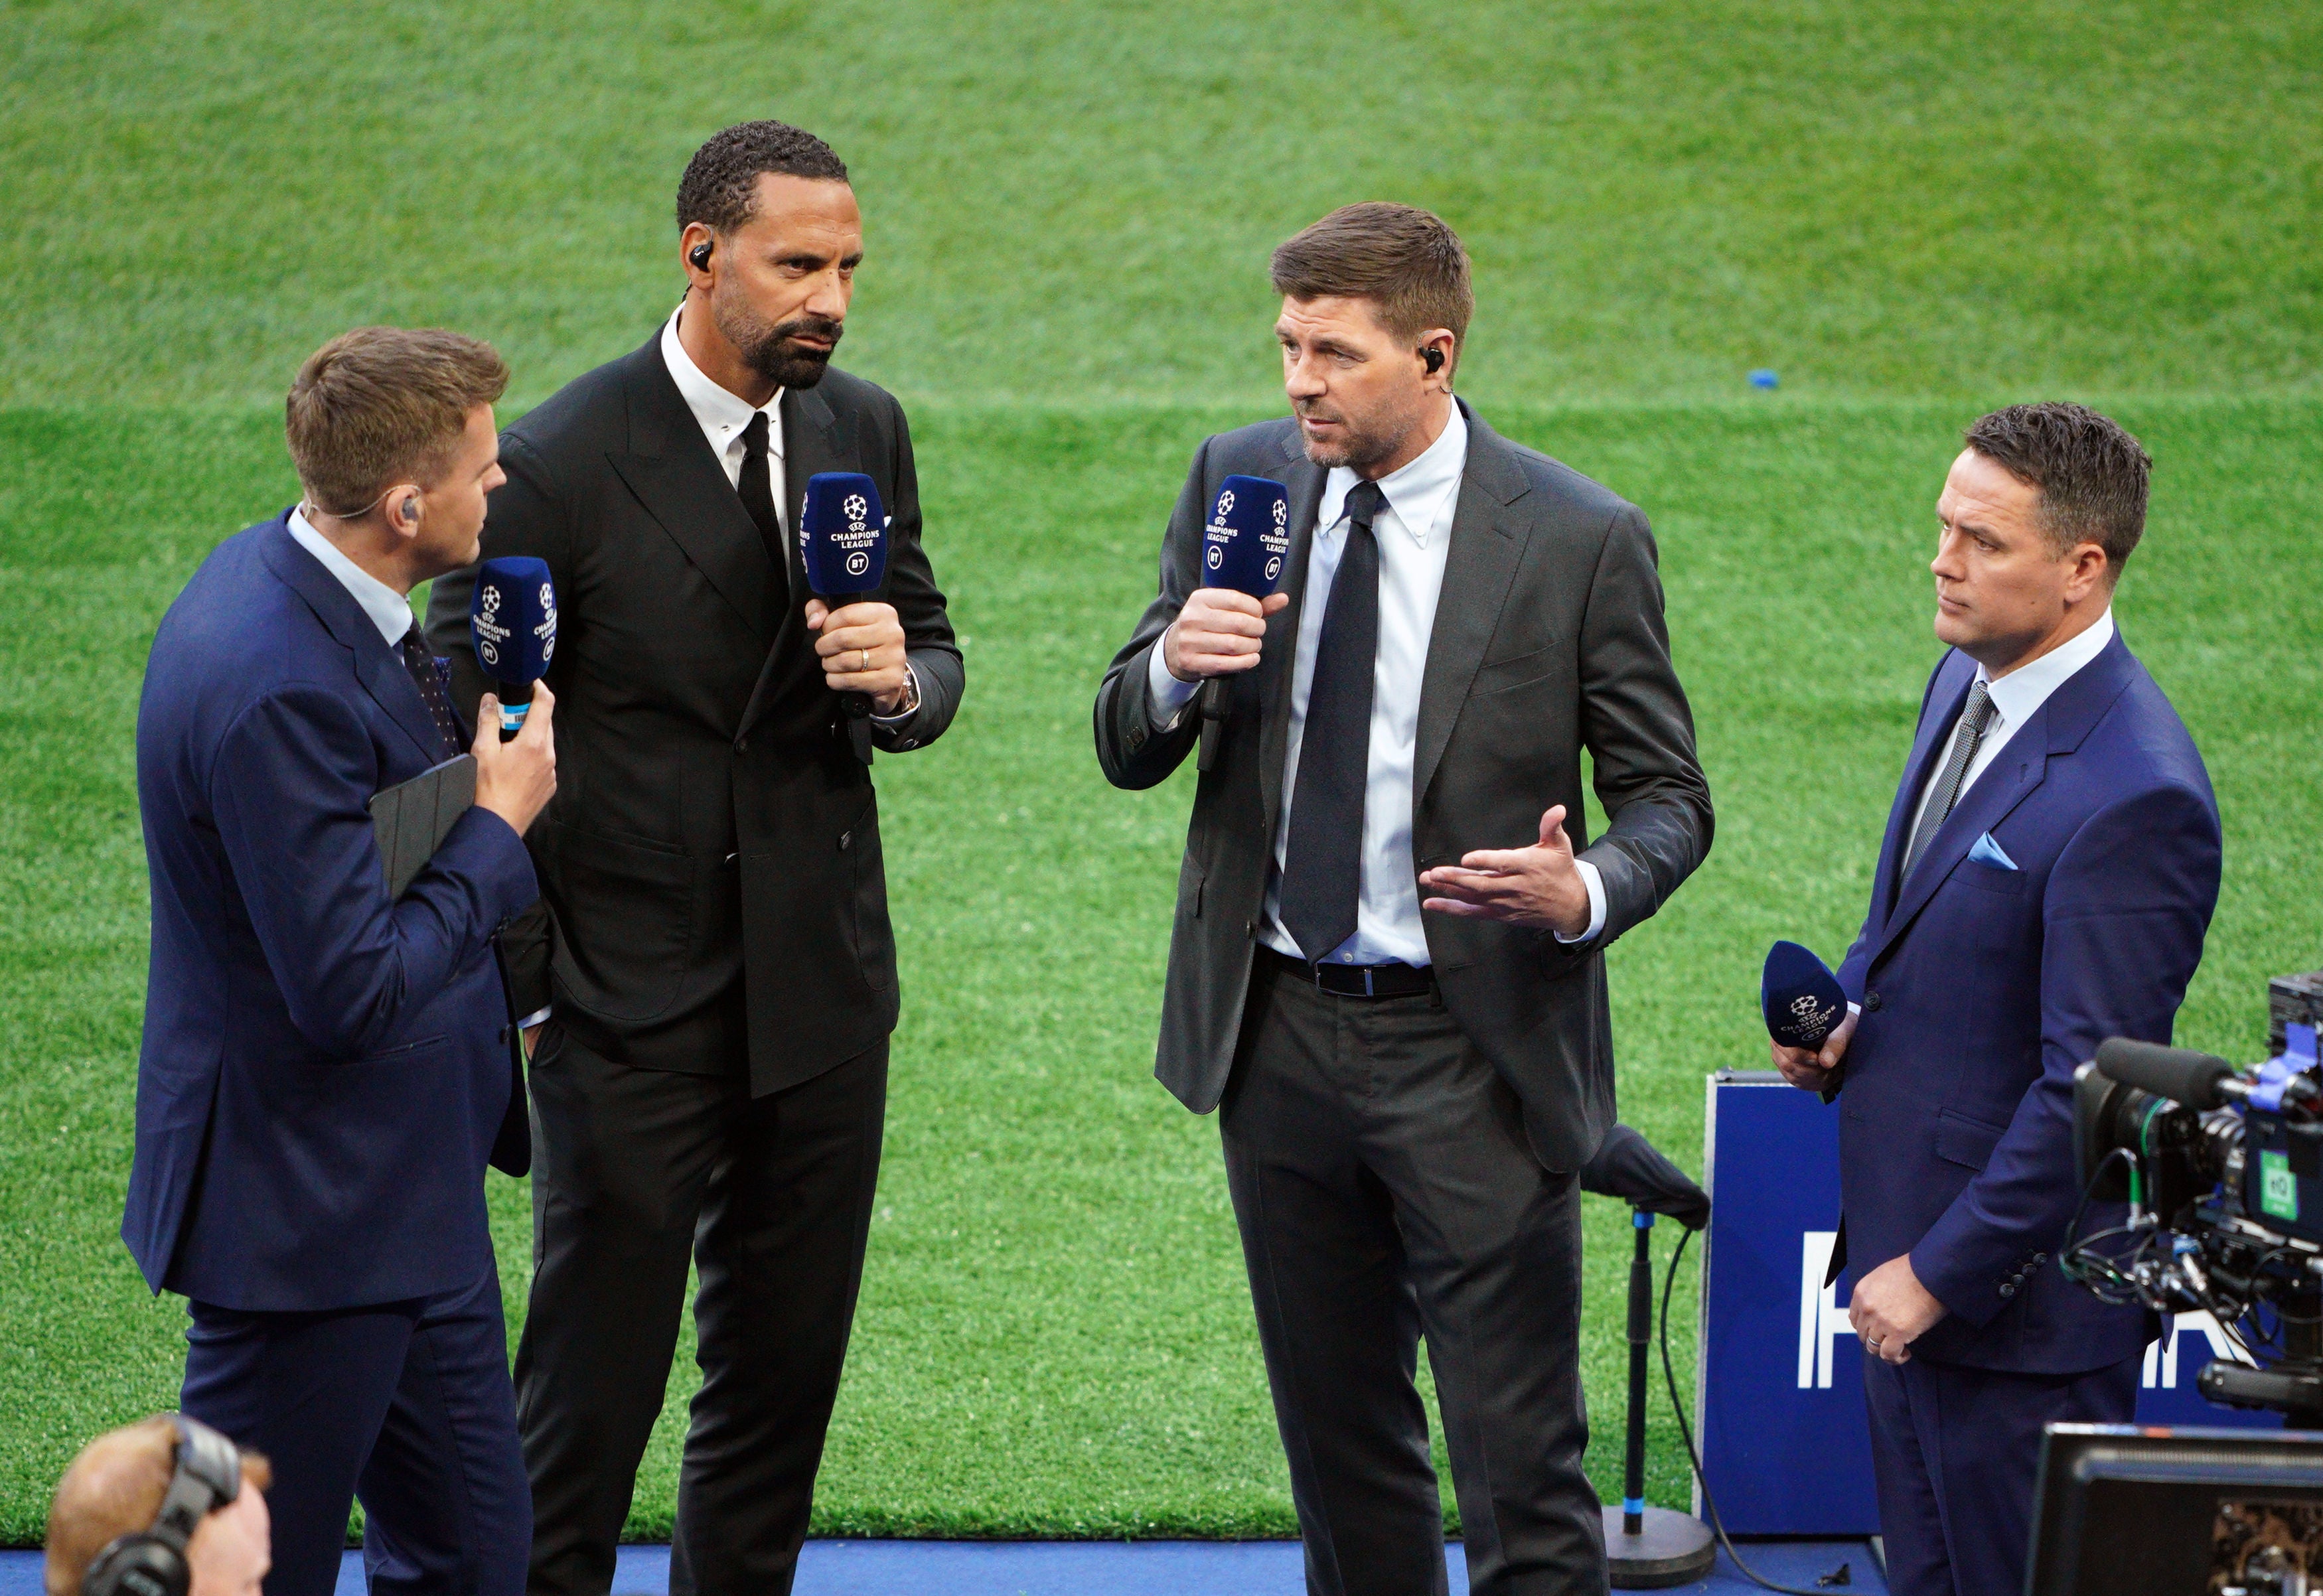 Bt Sport pundits discuss the Champions League final